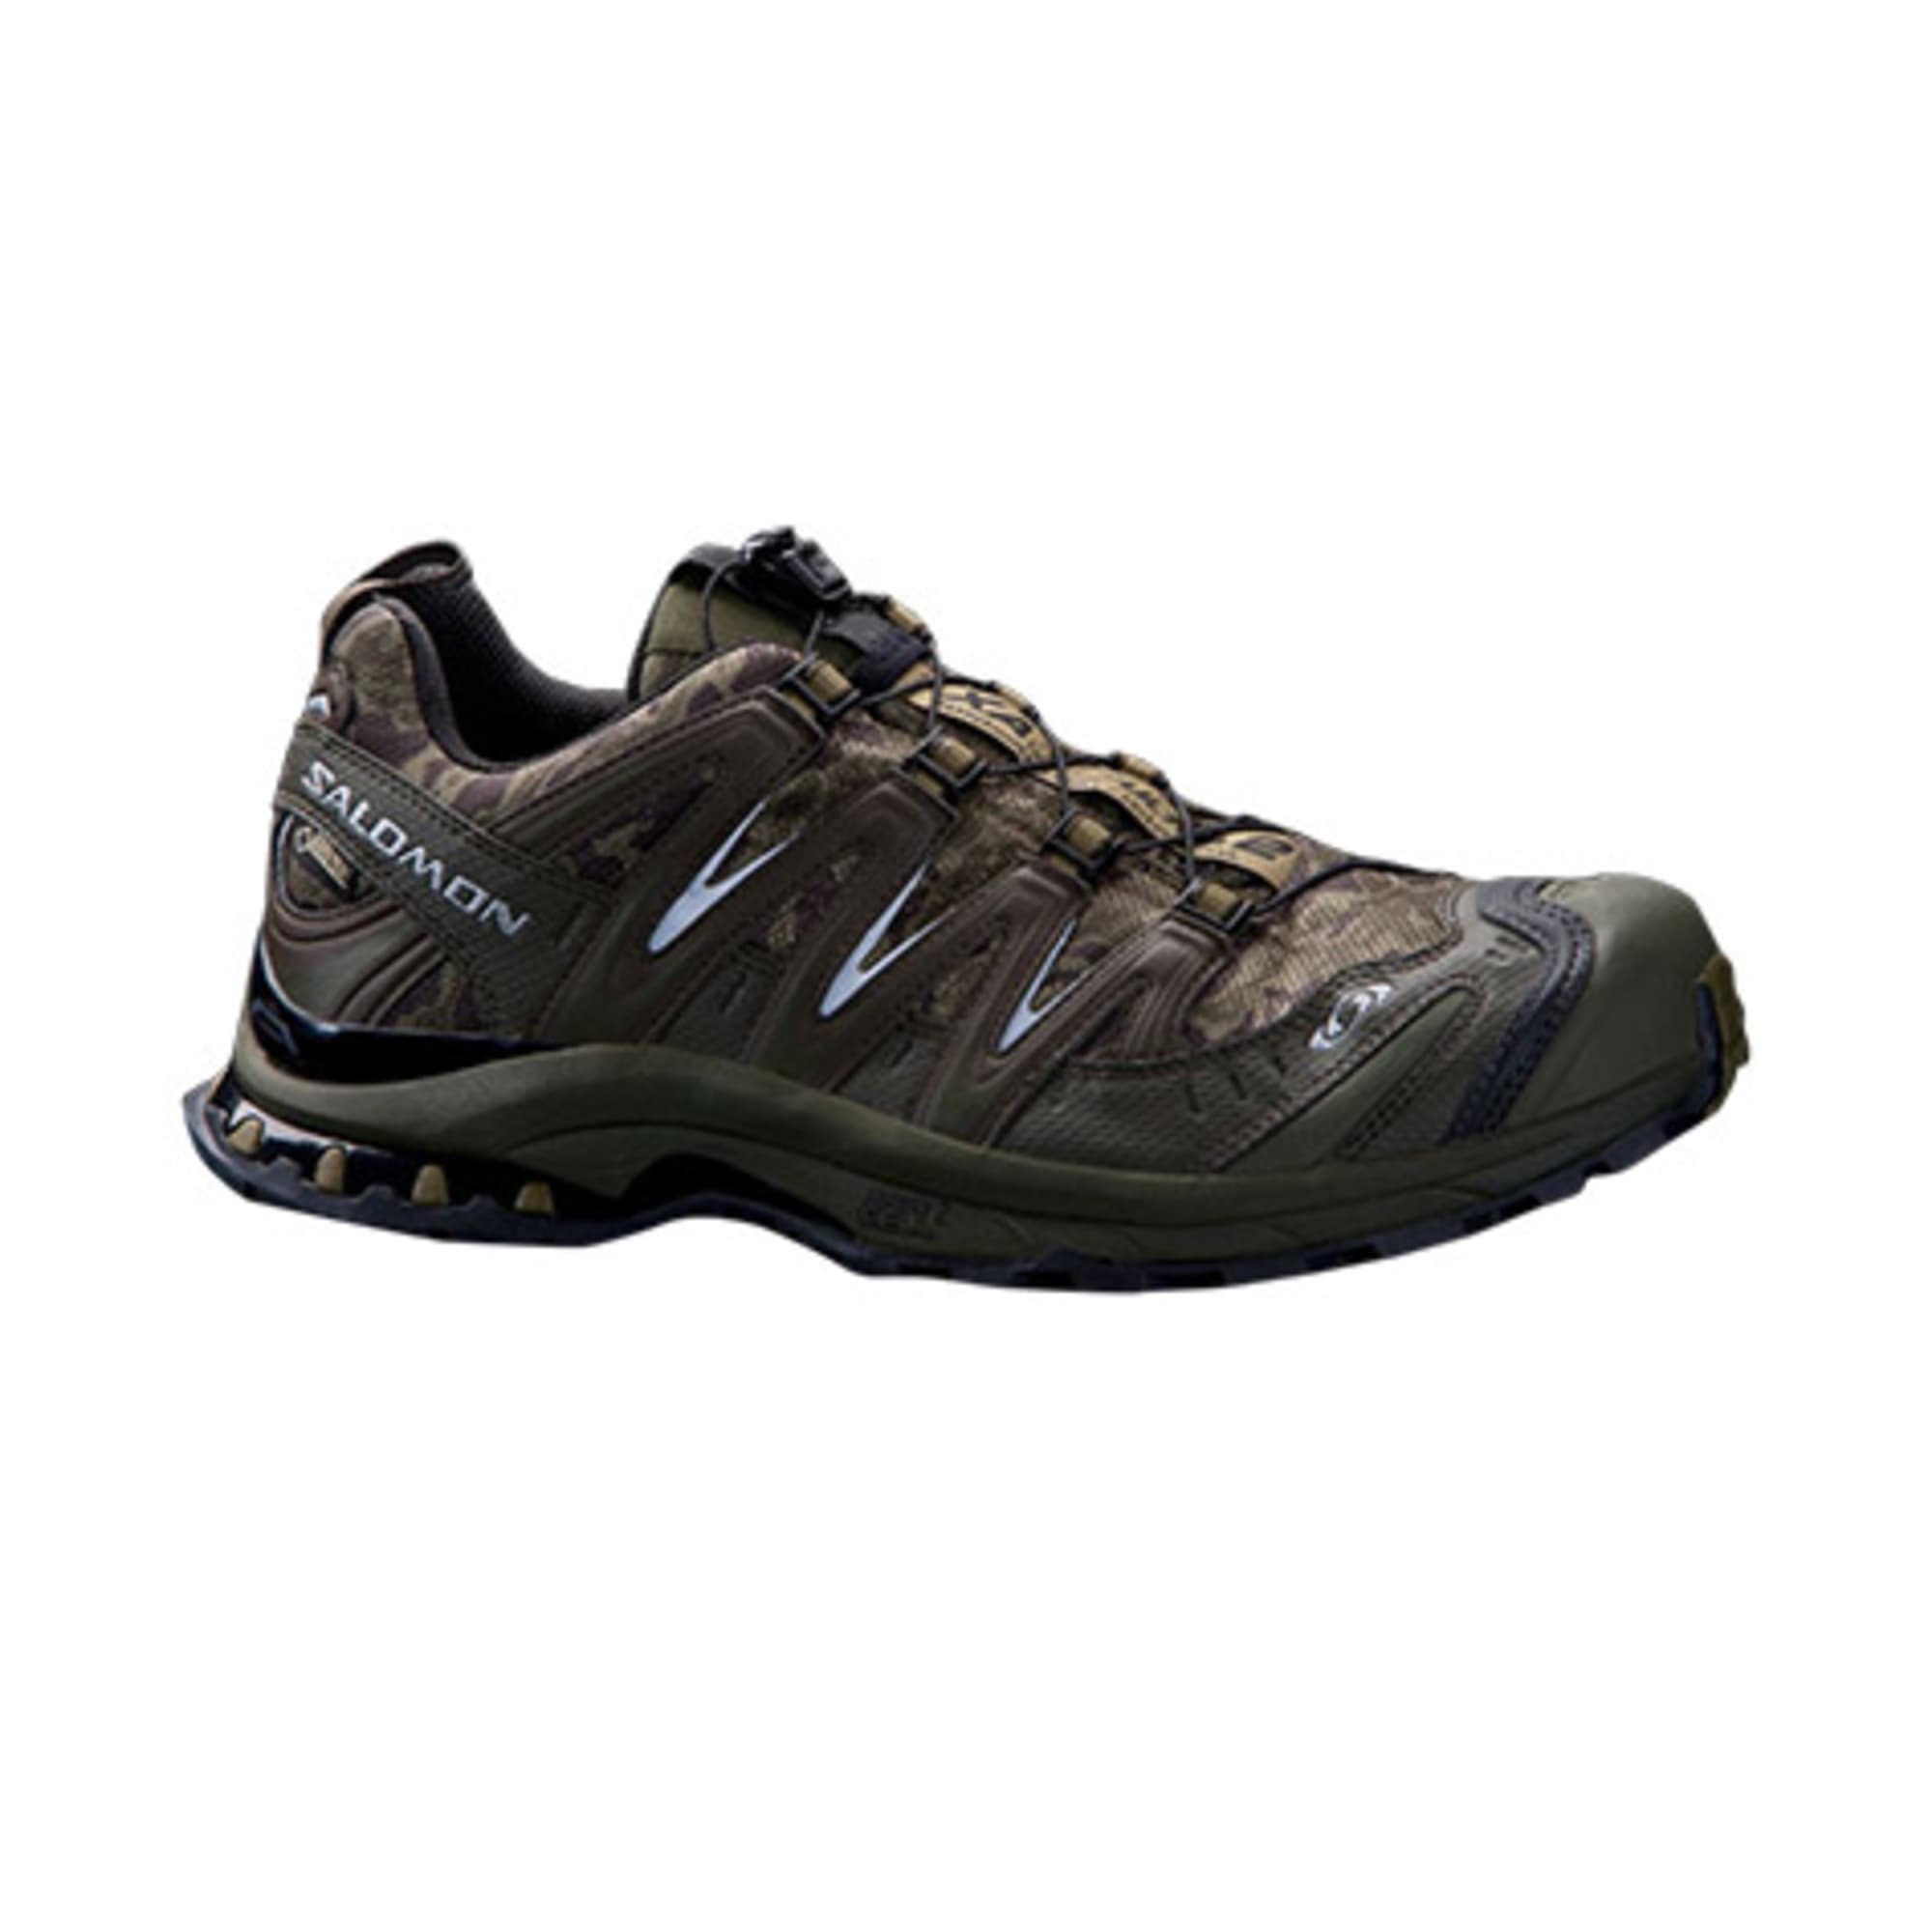 SALOMON Men's XA Pro 3D Ultra 2 GTX Trail Running Shoes, Camo Forest -  Eastern Mountain Sports